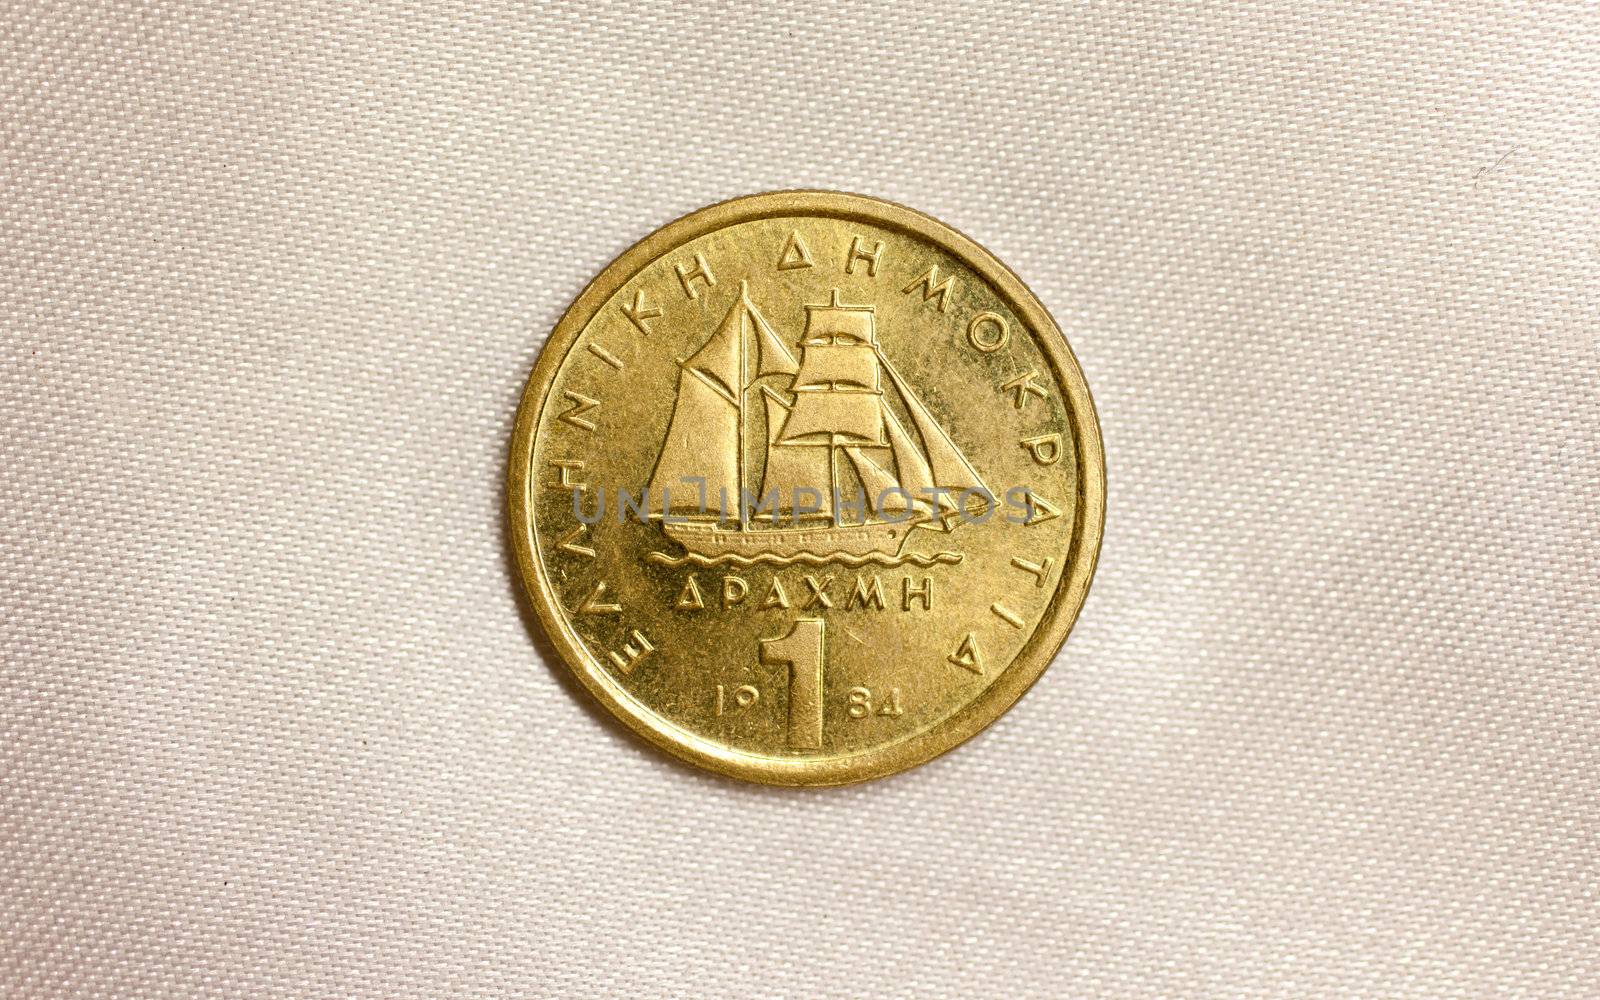 One drachma. Greek coin by Portokalis